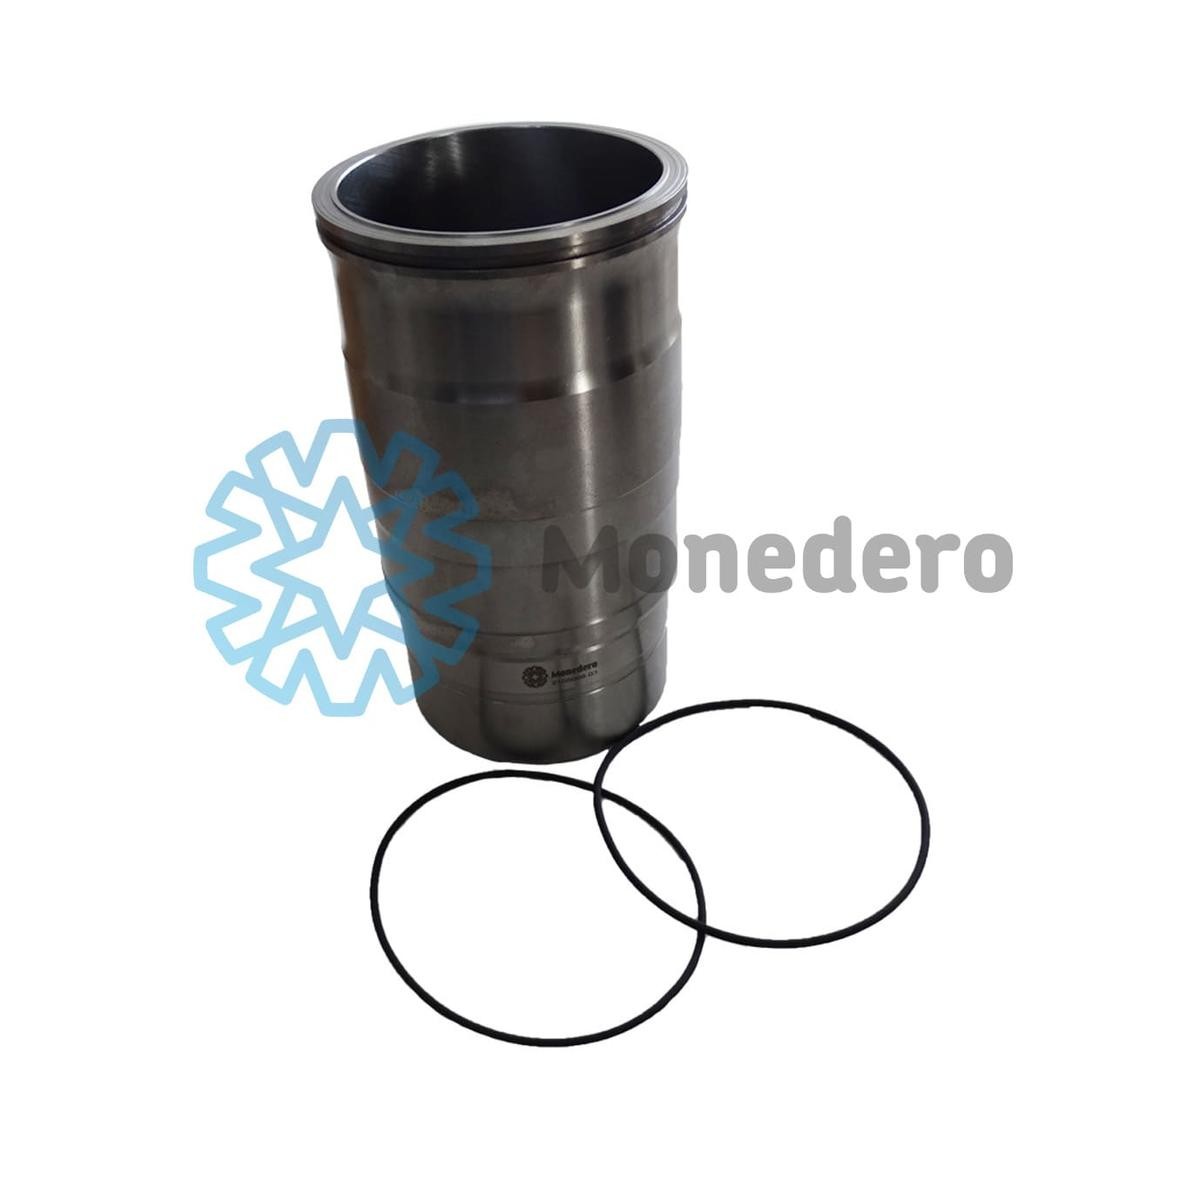 MONEDERO 40011300004 Cylinder Sleeve 1850688